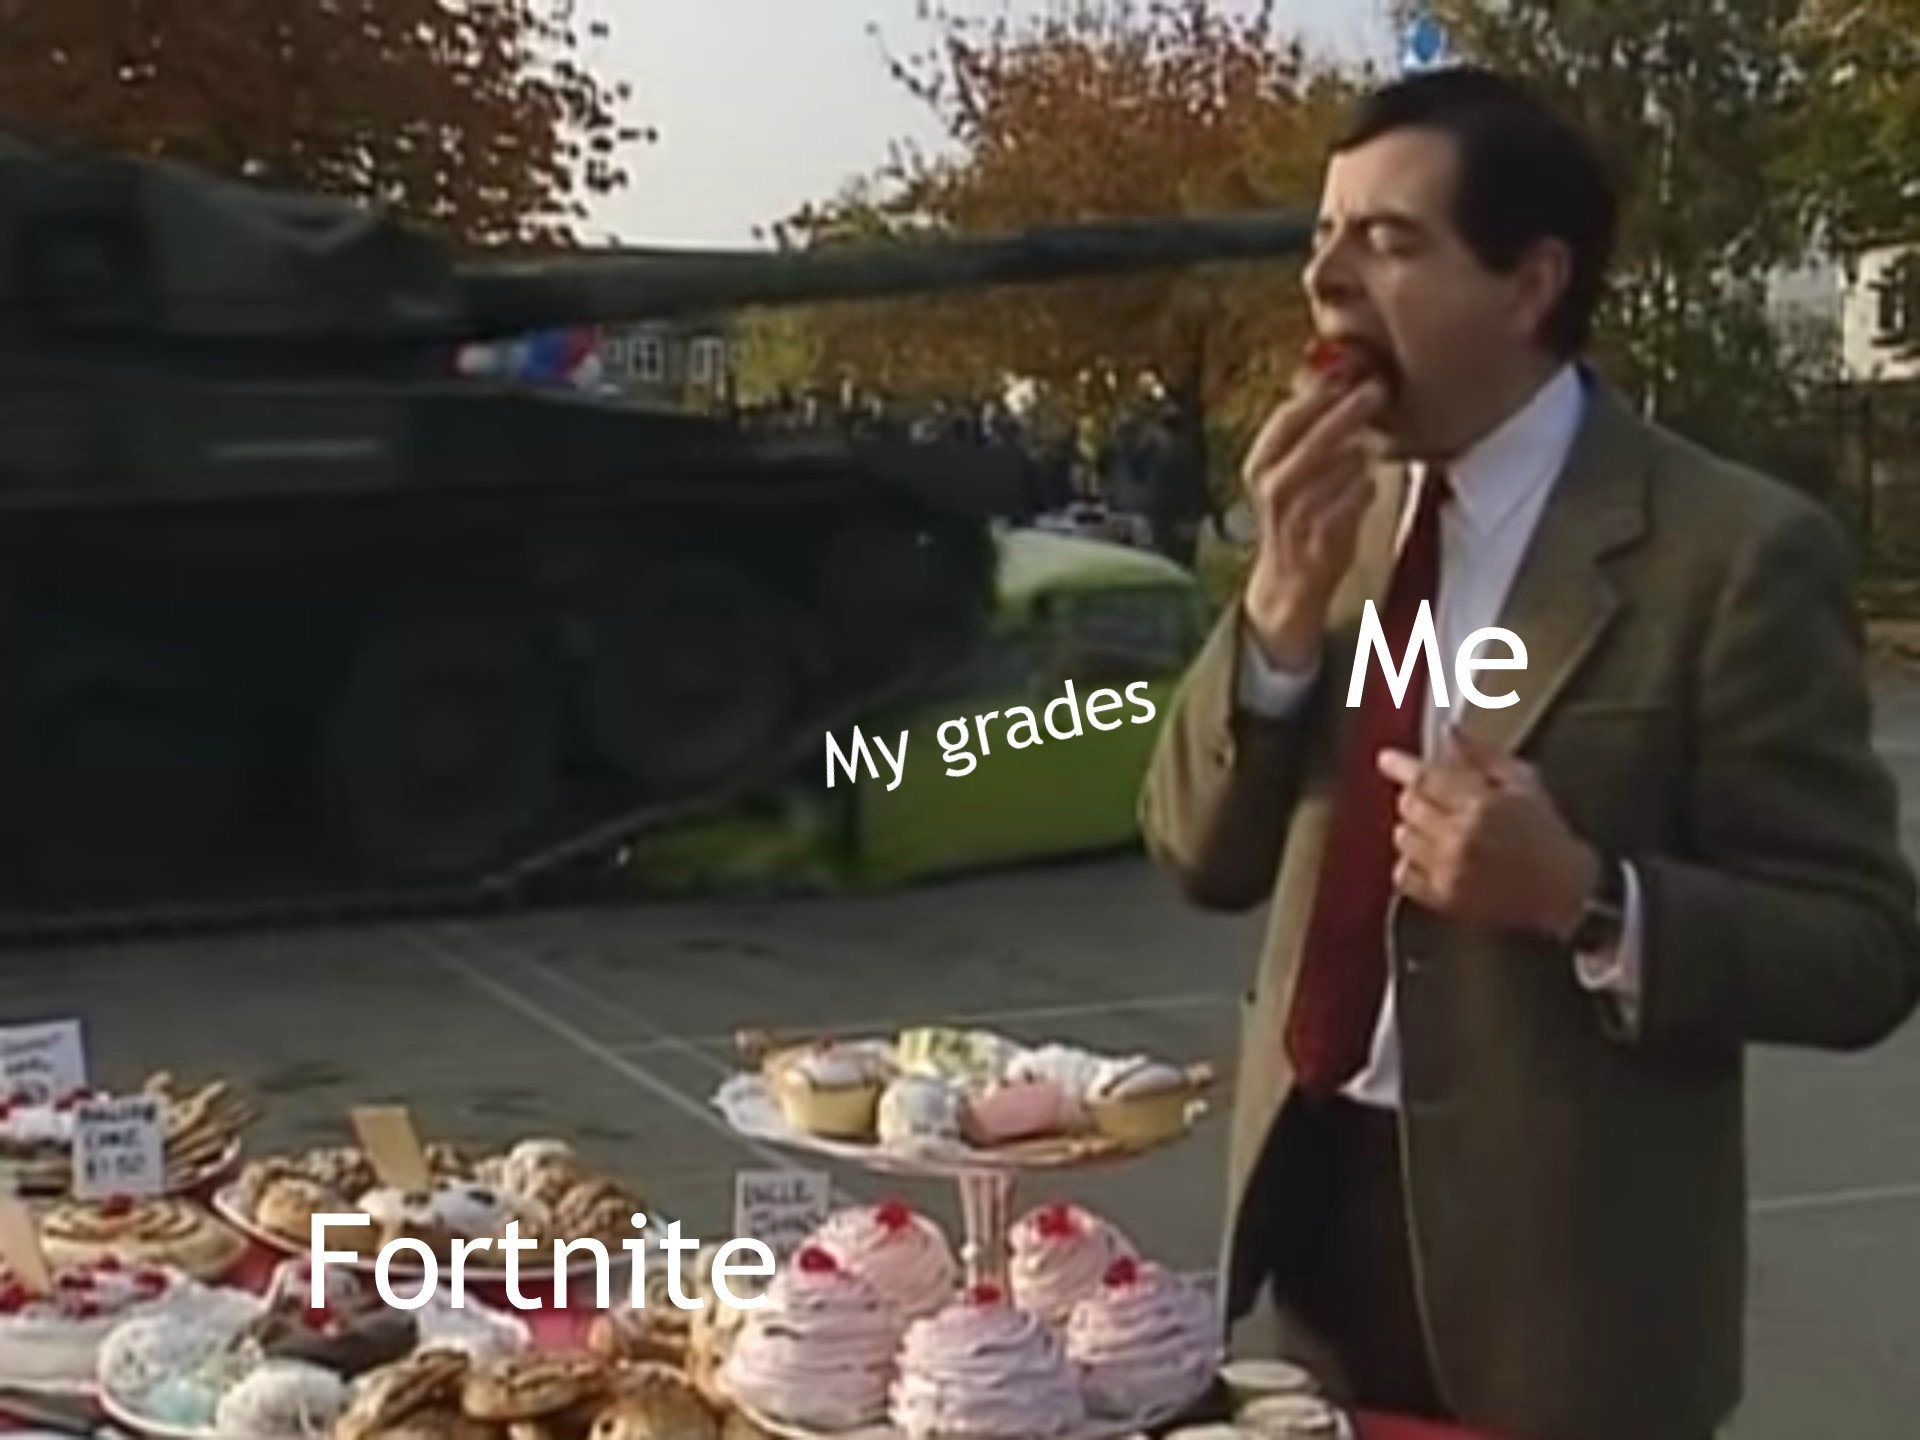 My grades - meme